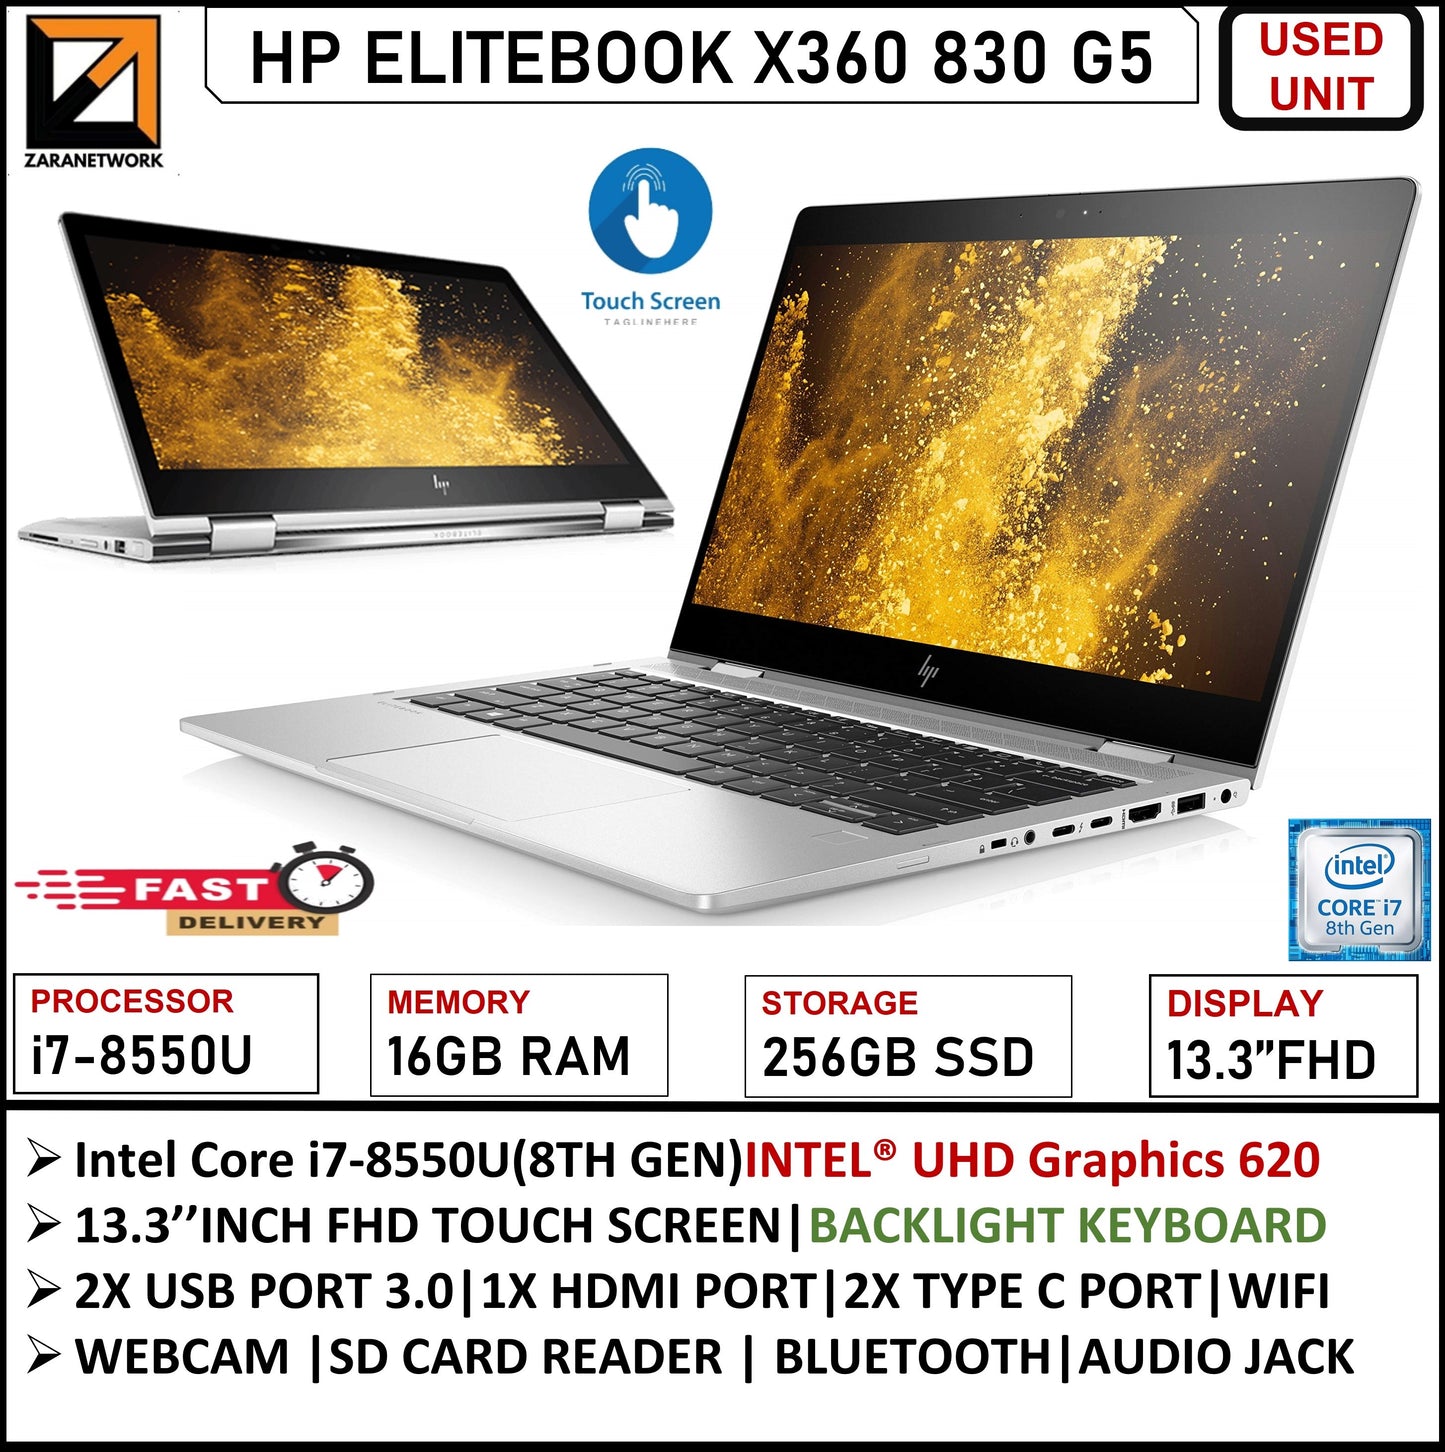 HP ELITEBOOK X360 830 G5 CORE i7-8550U (8TH GEN) 13.3 FHD TOUCHSCREEN 16GB RAM/256GB SSD